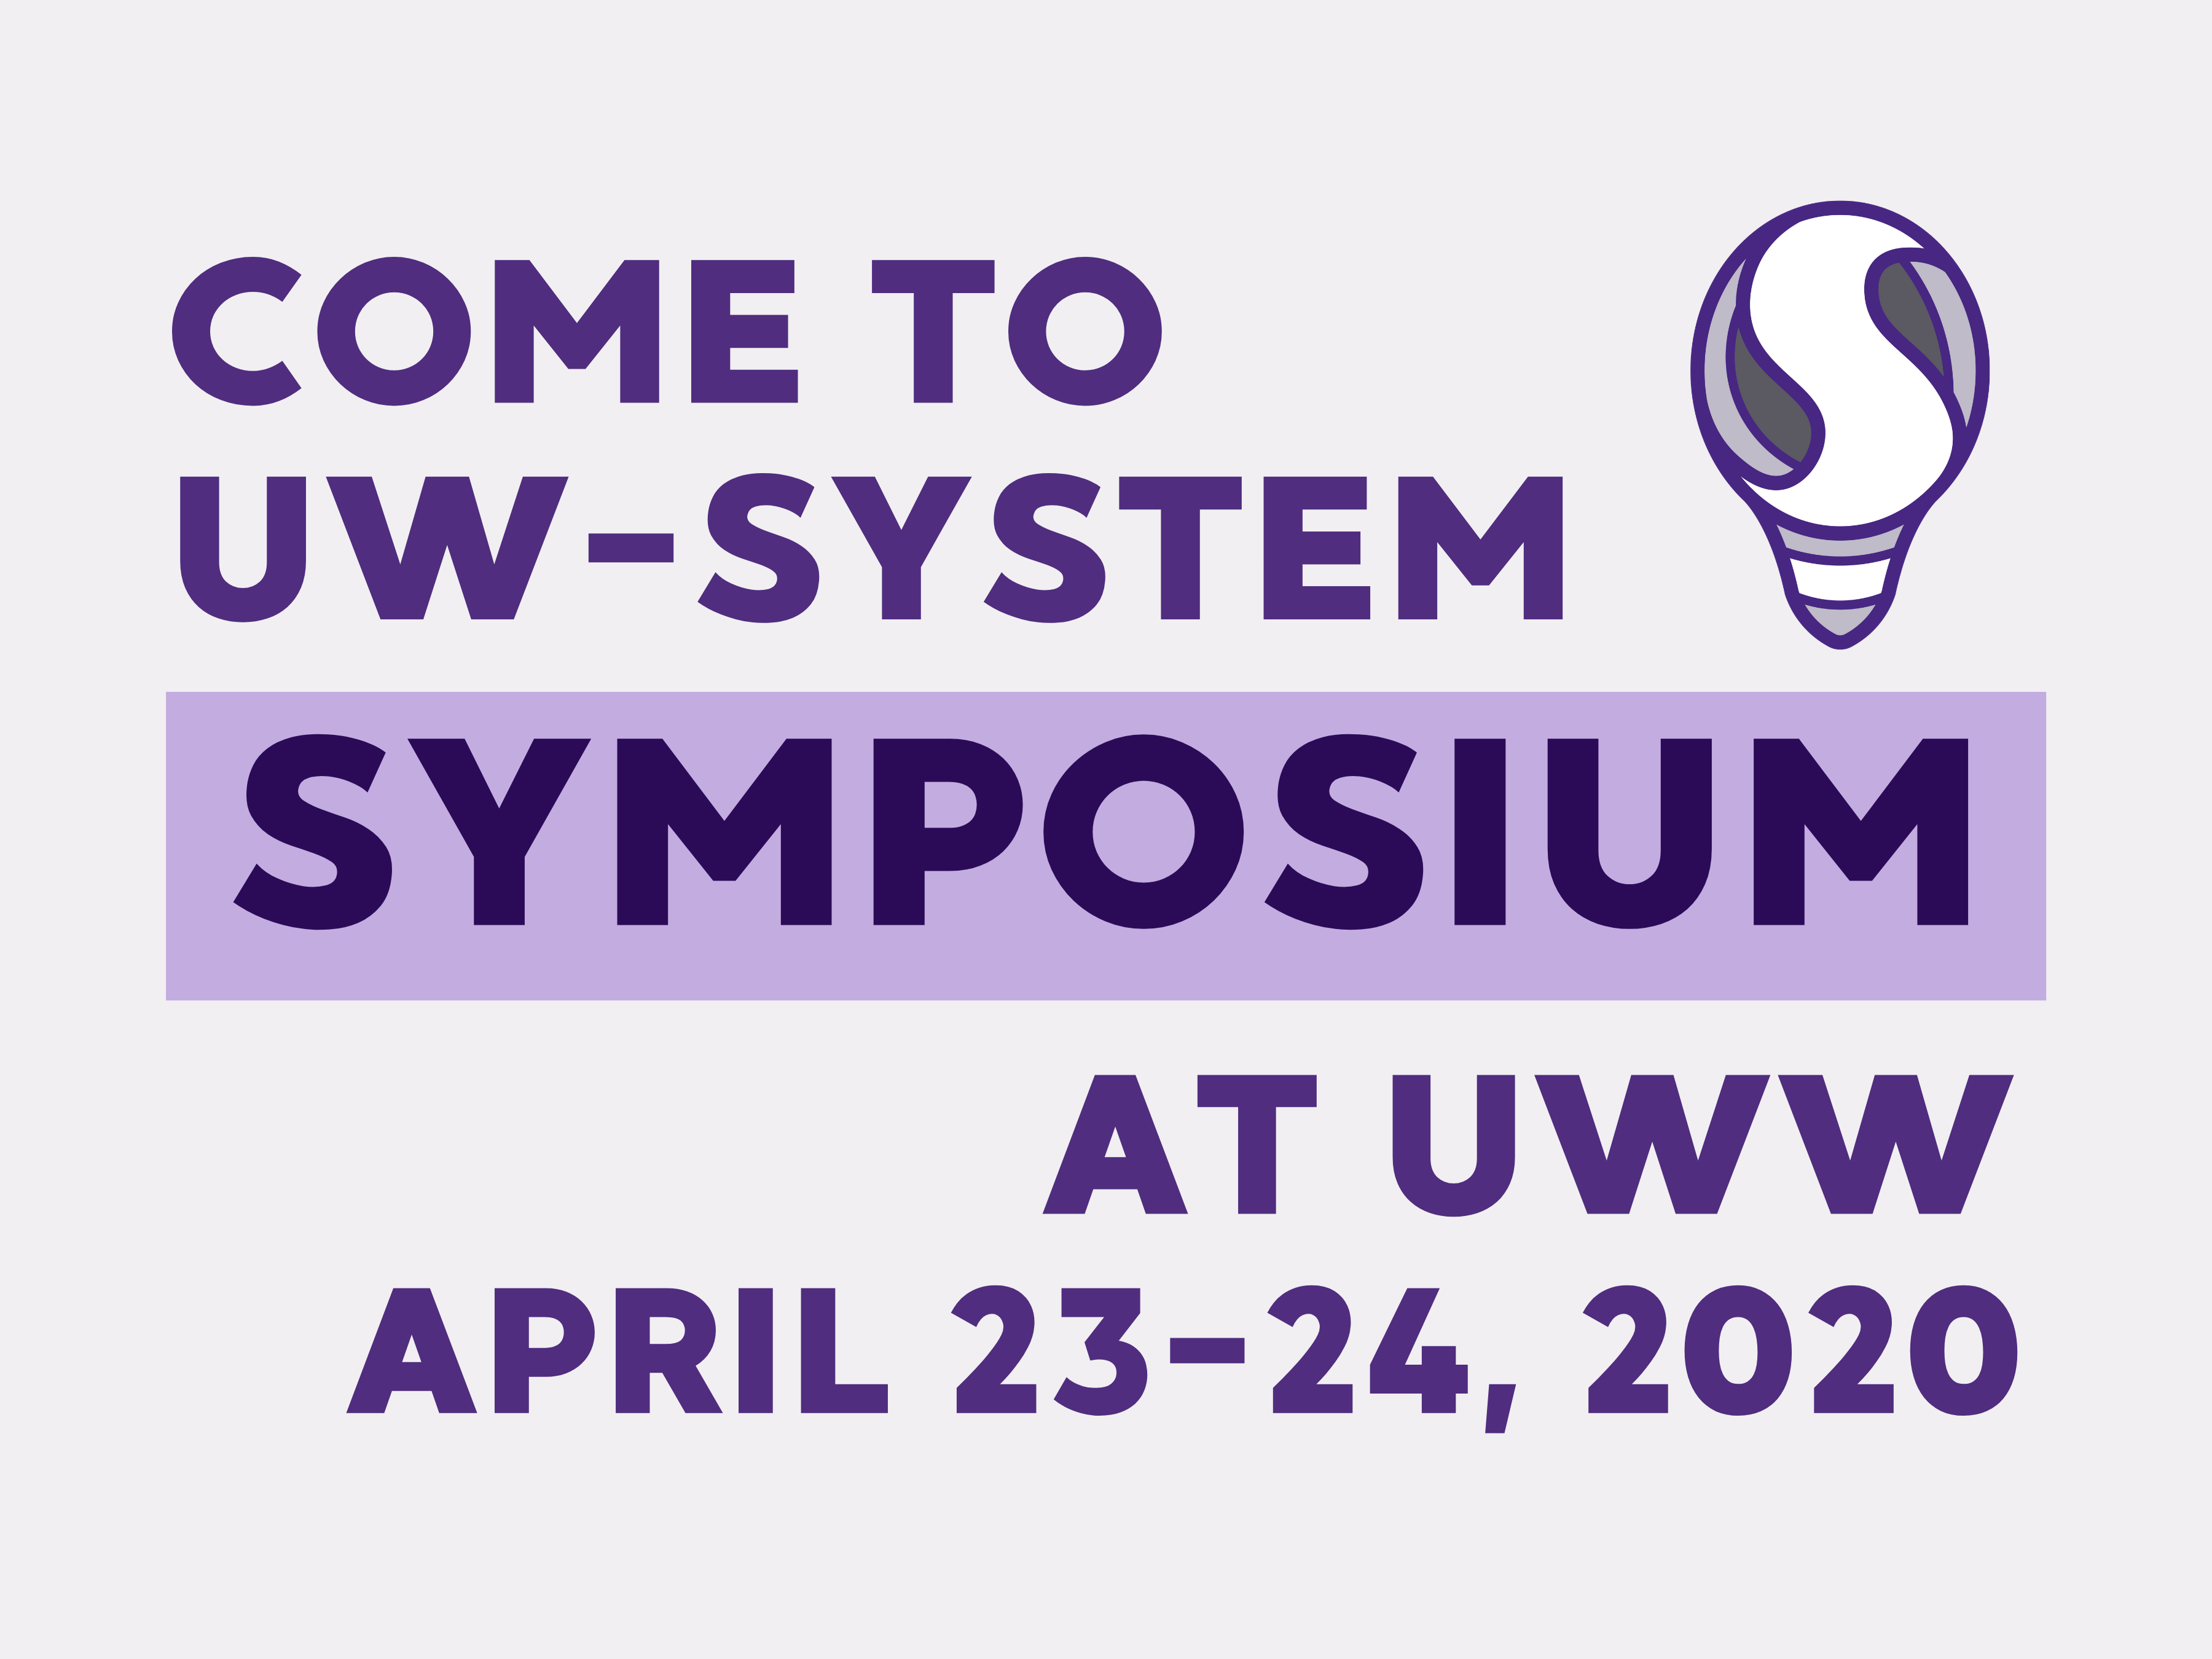 Come to UW-System Symposium